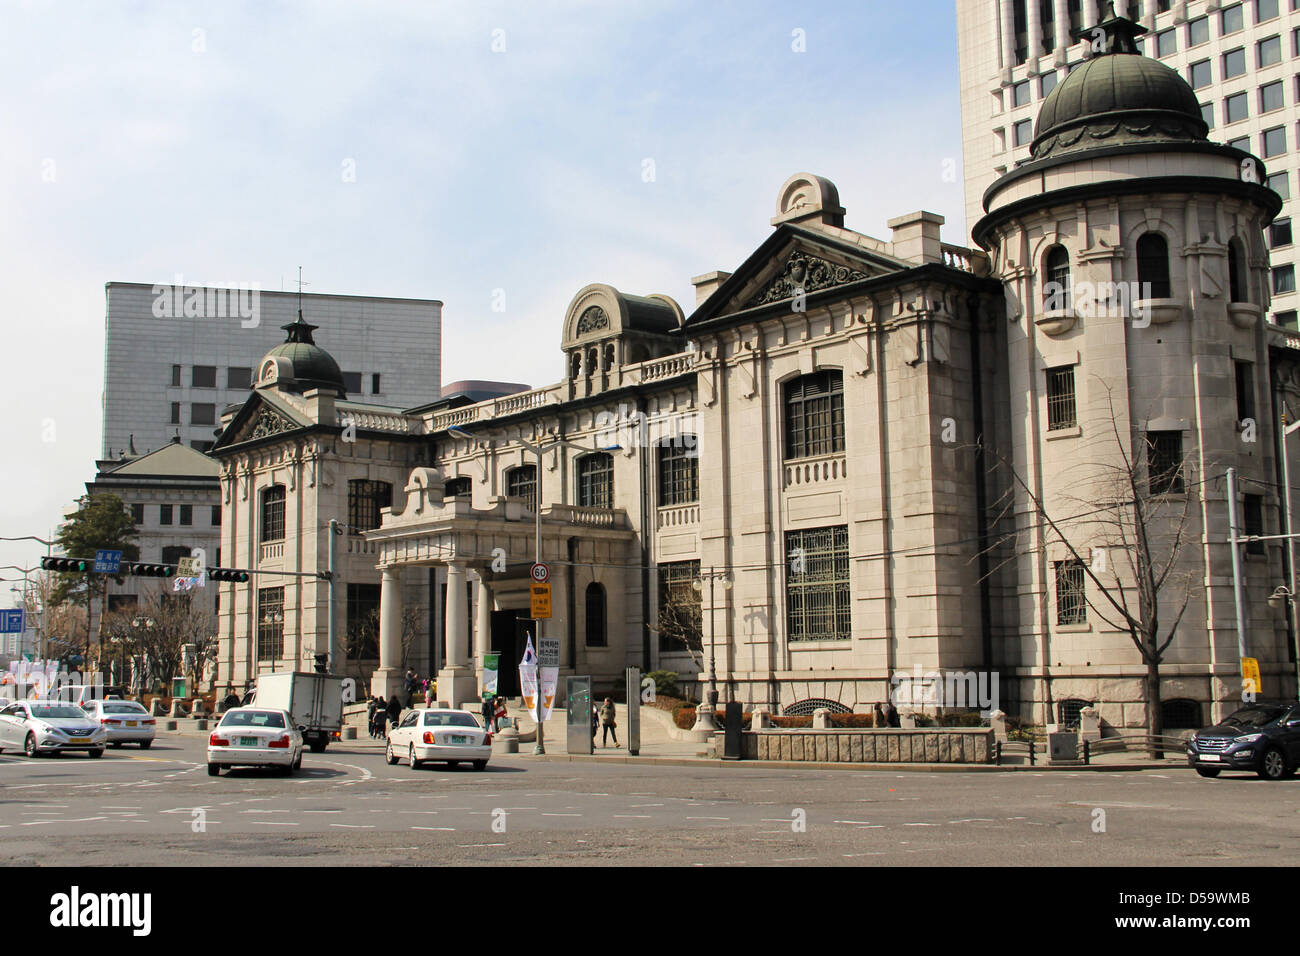 The Bank of Korea (BOK) - central bank of South Korea in Seoul Stock Photo